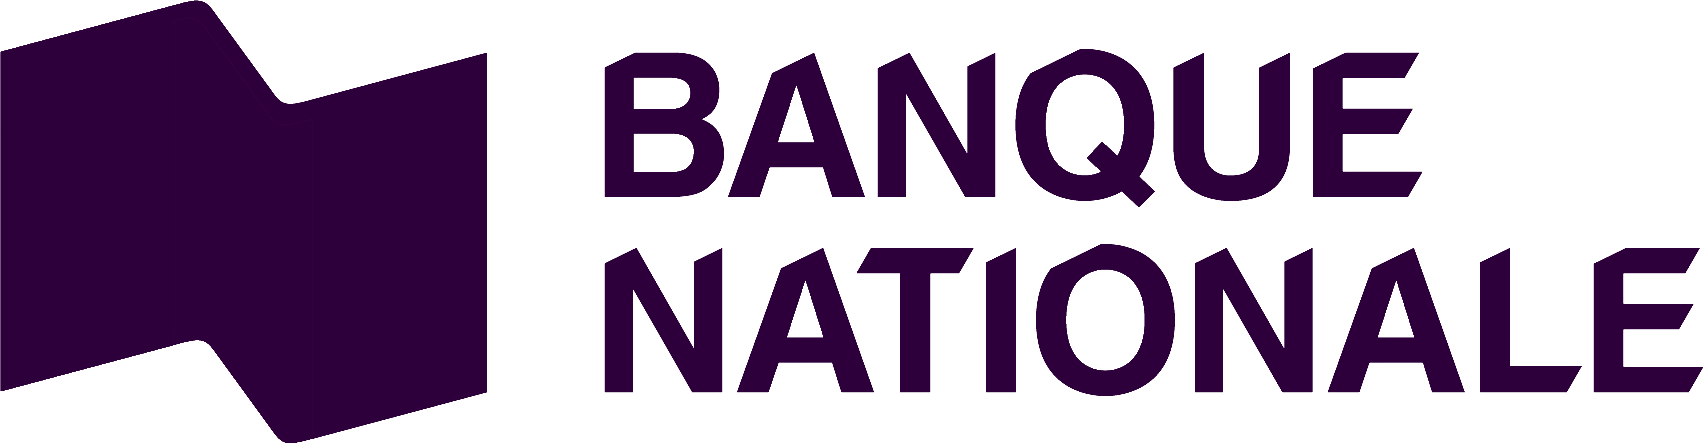 Banque nationale